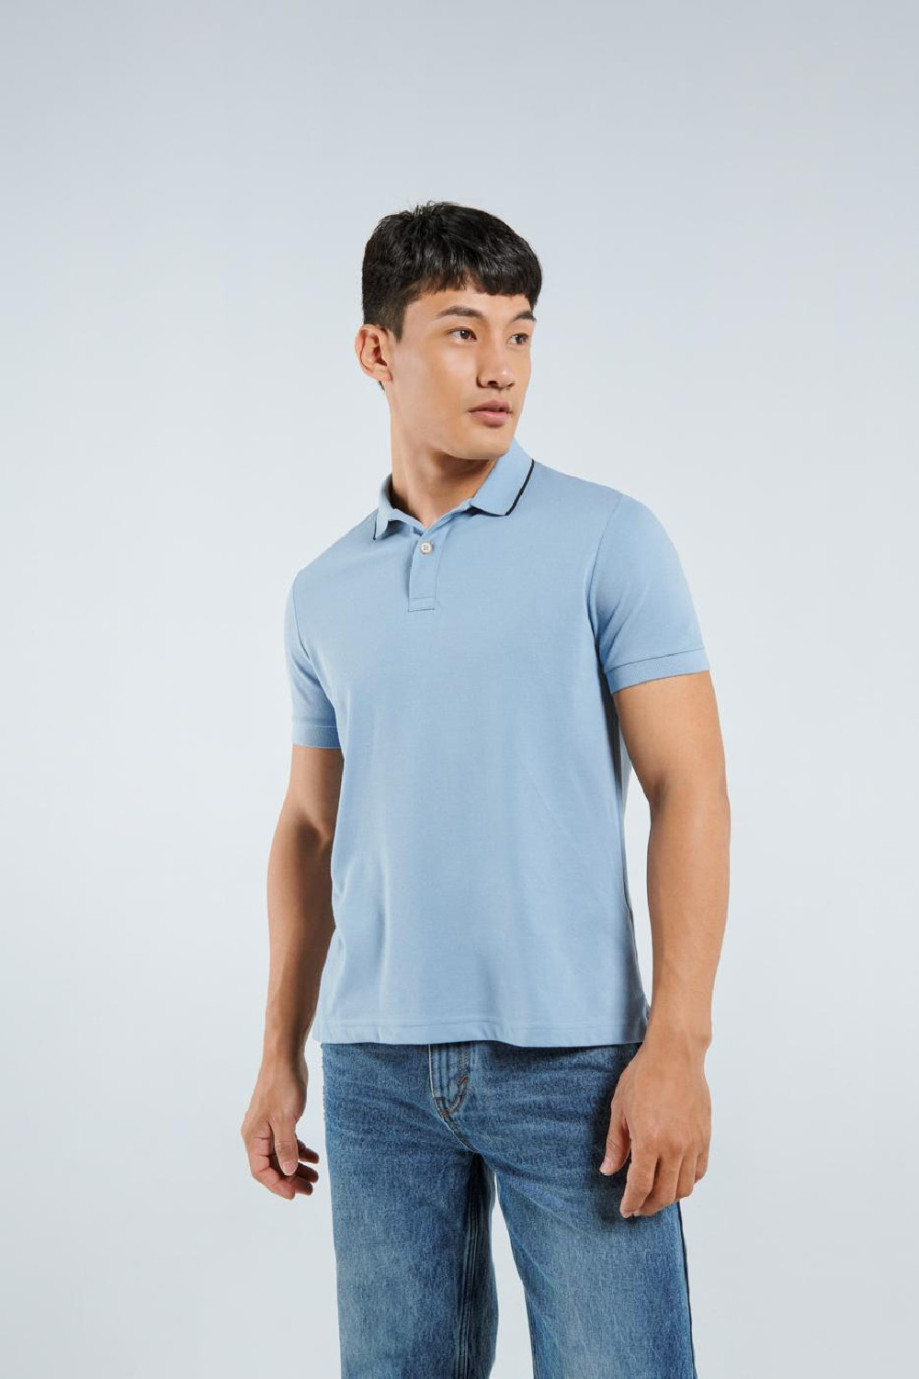 Camiseta unicolor polo con detalles tejidos, botones y manga corta